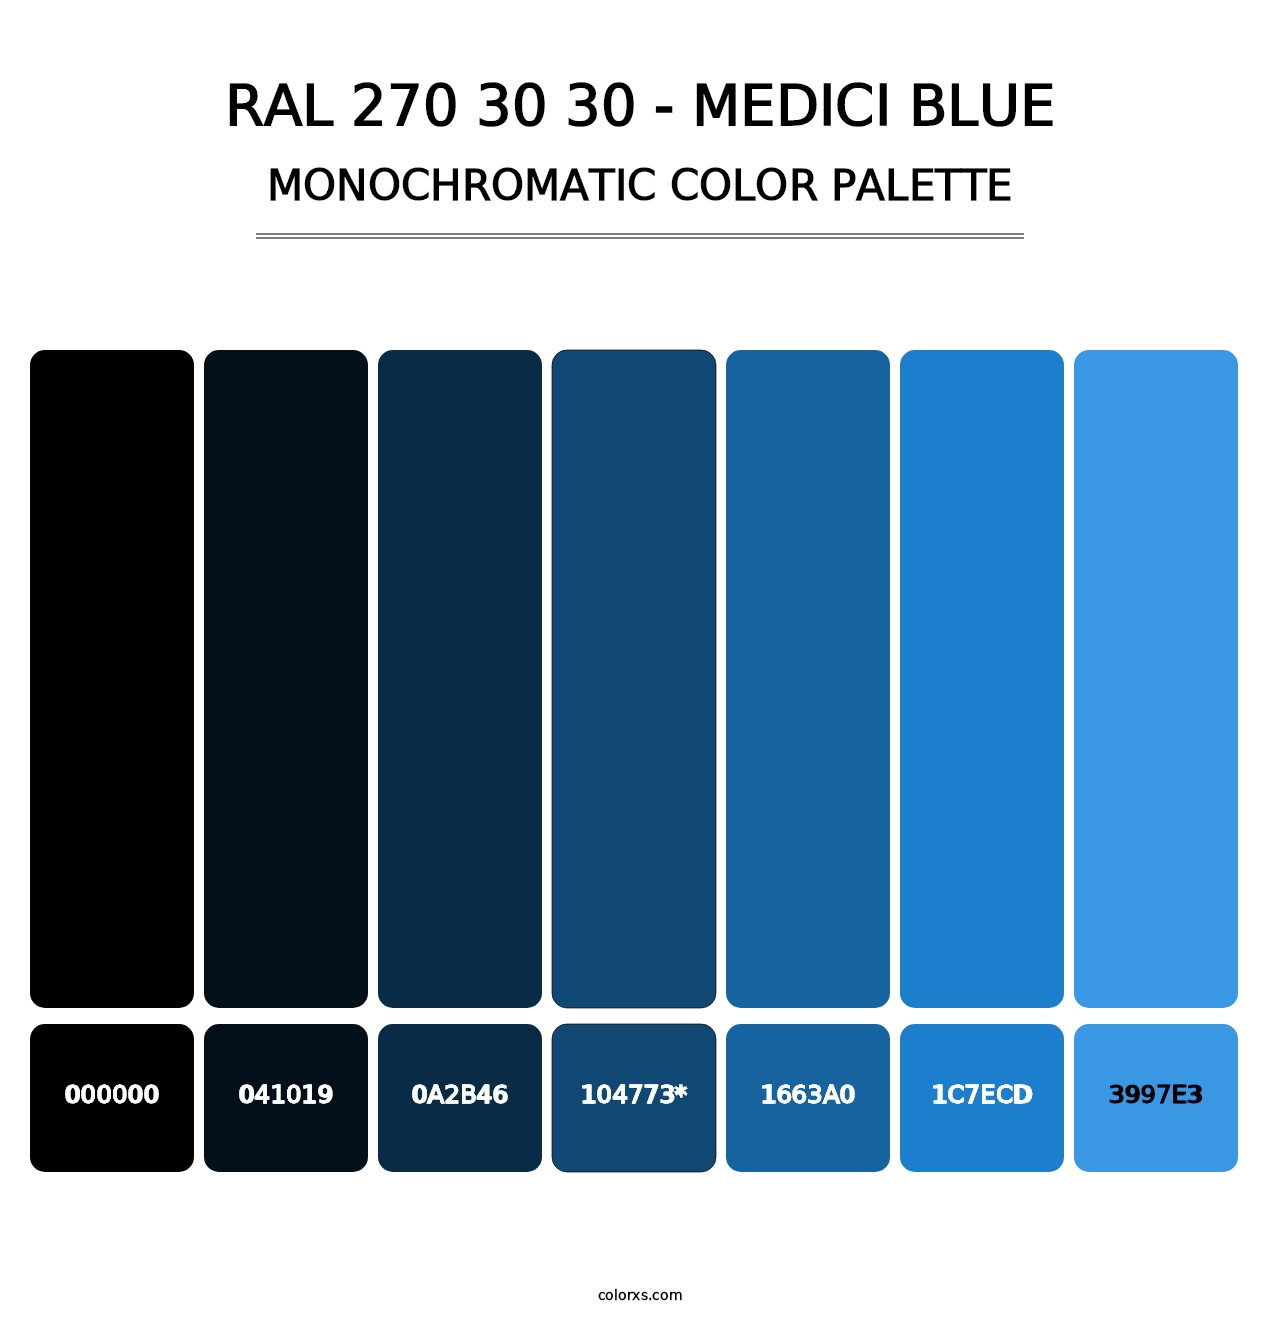 RAL 270 30 30 - Medici Blue - Monochromatic Color Palette